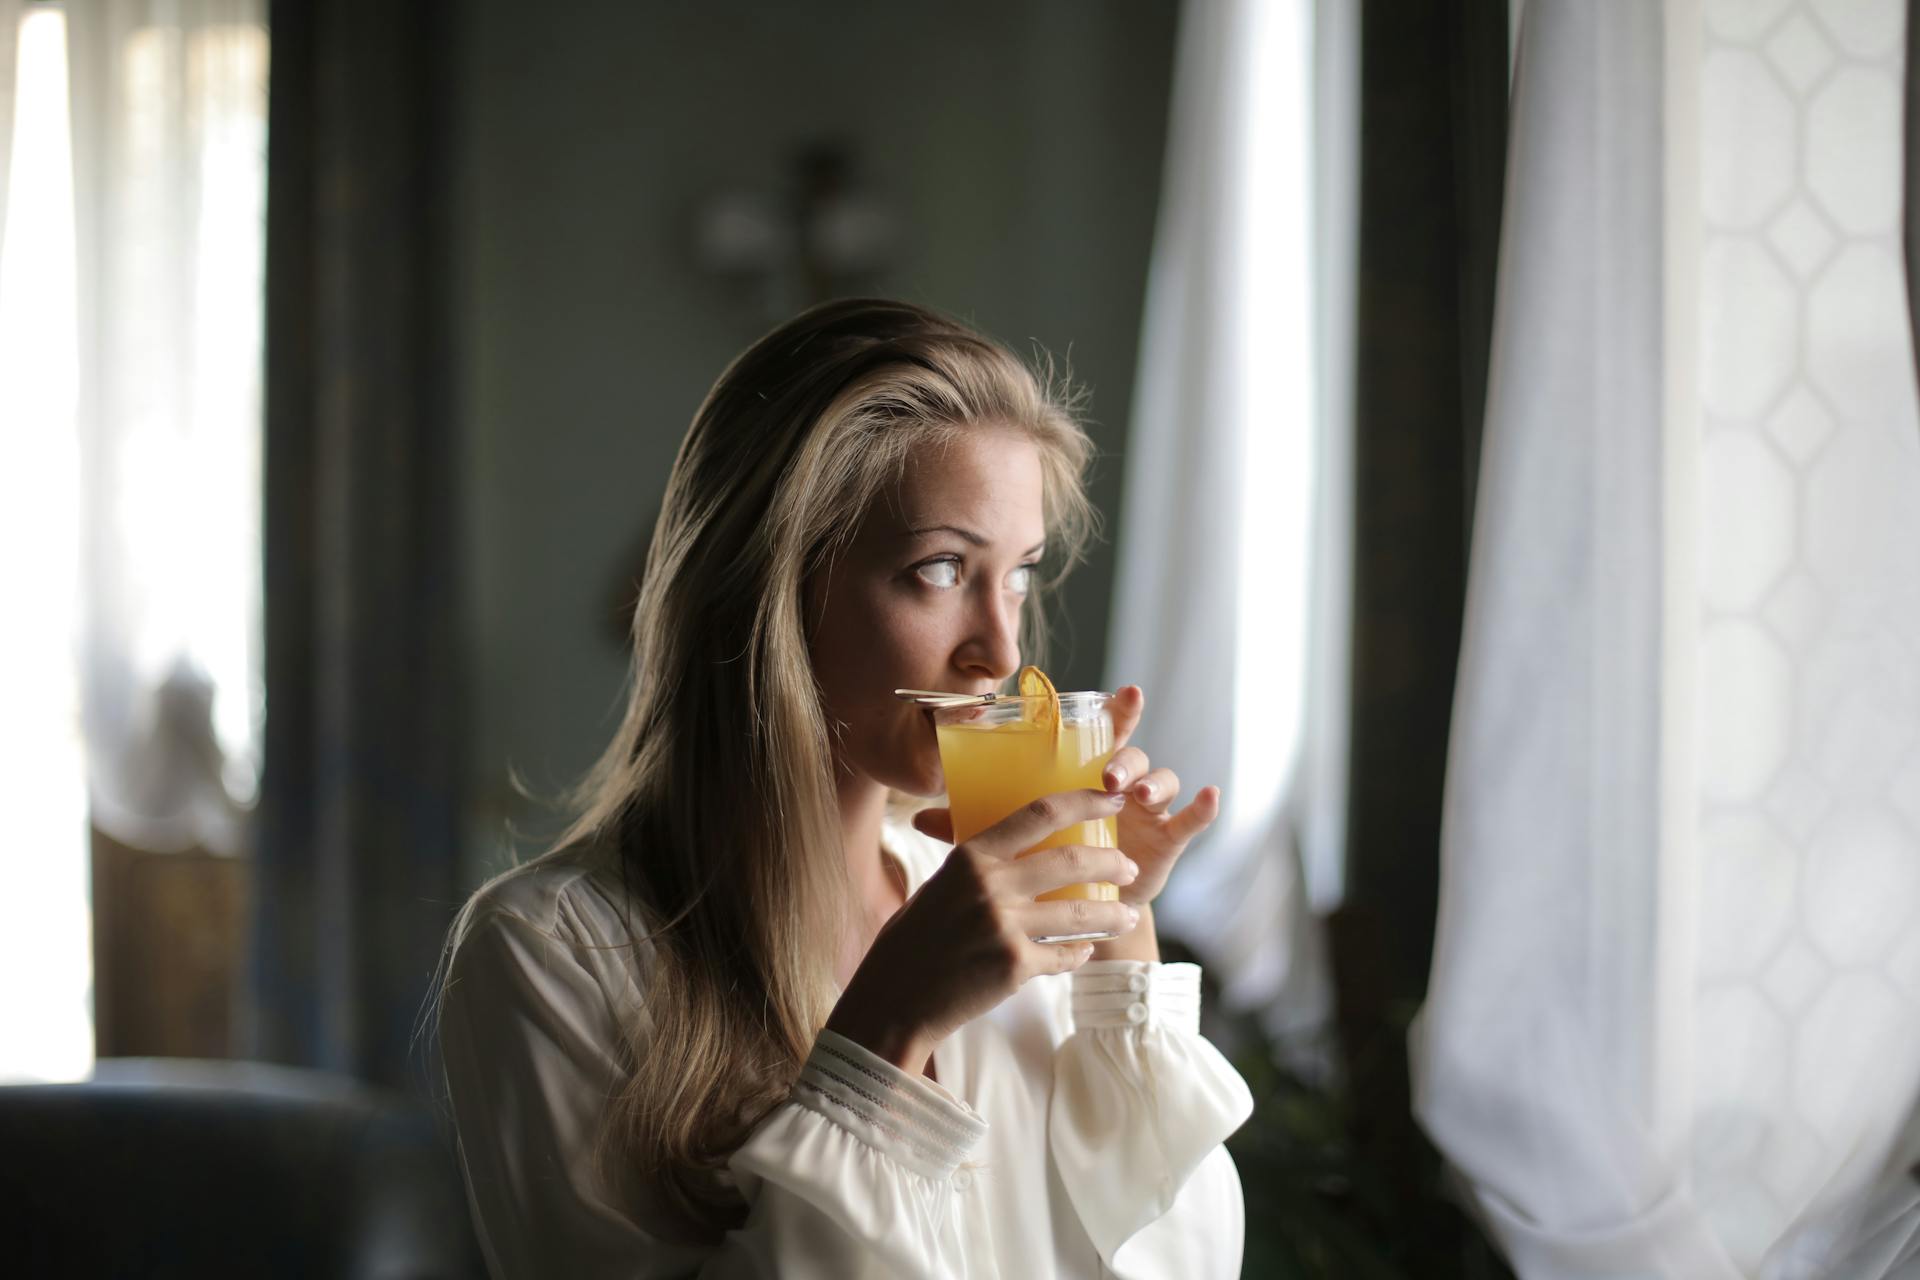 A woman drinking orange juice | Source: Pexels